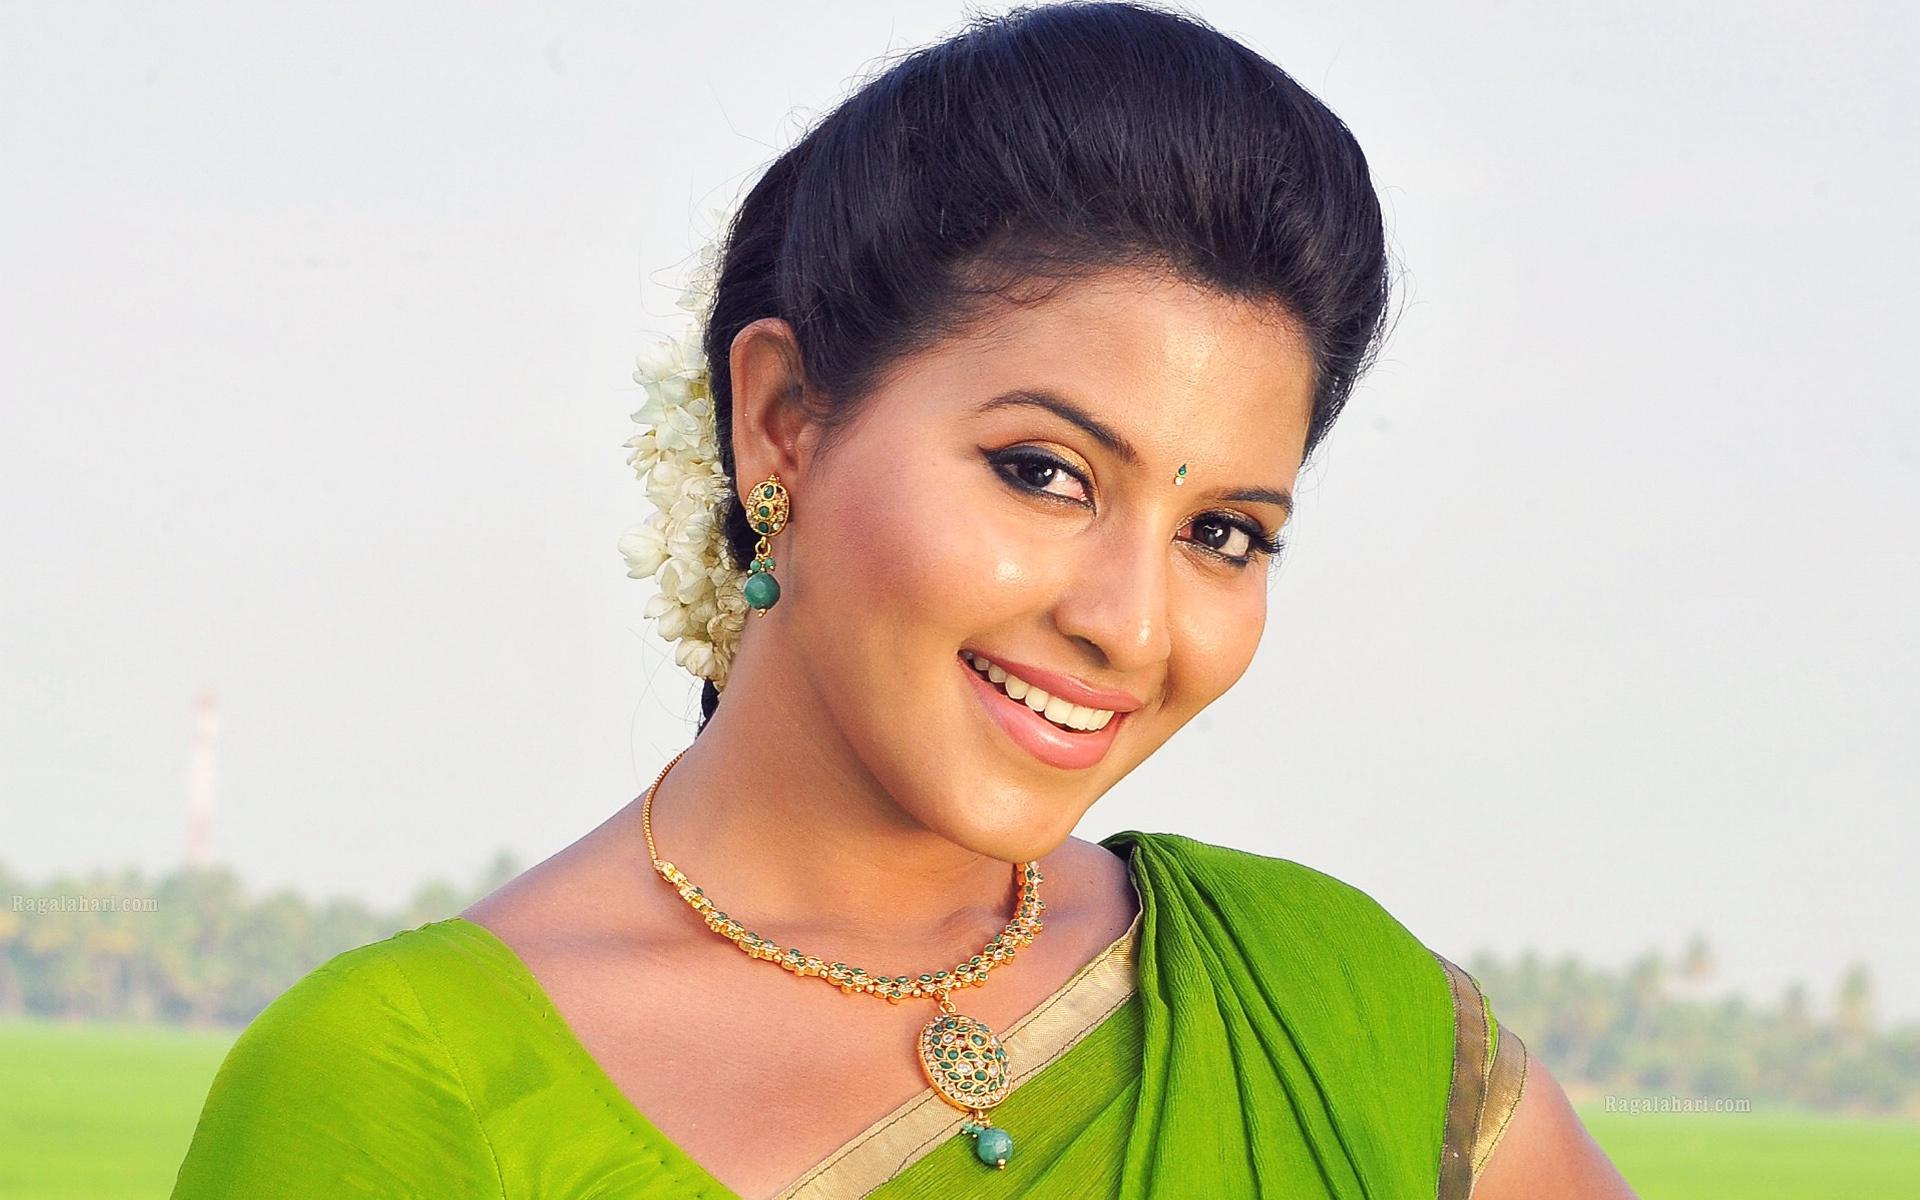 Anjali Telugu Actress Wallpaper in jpg format for free download